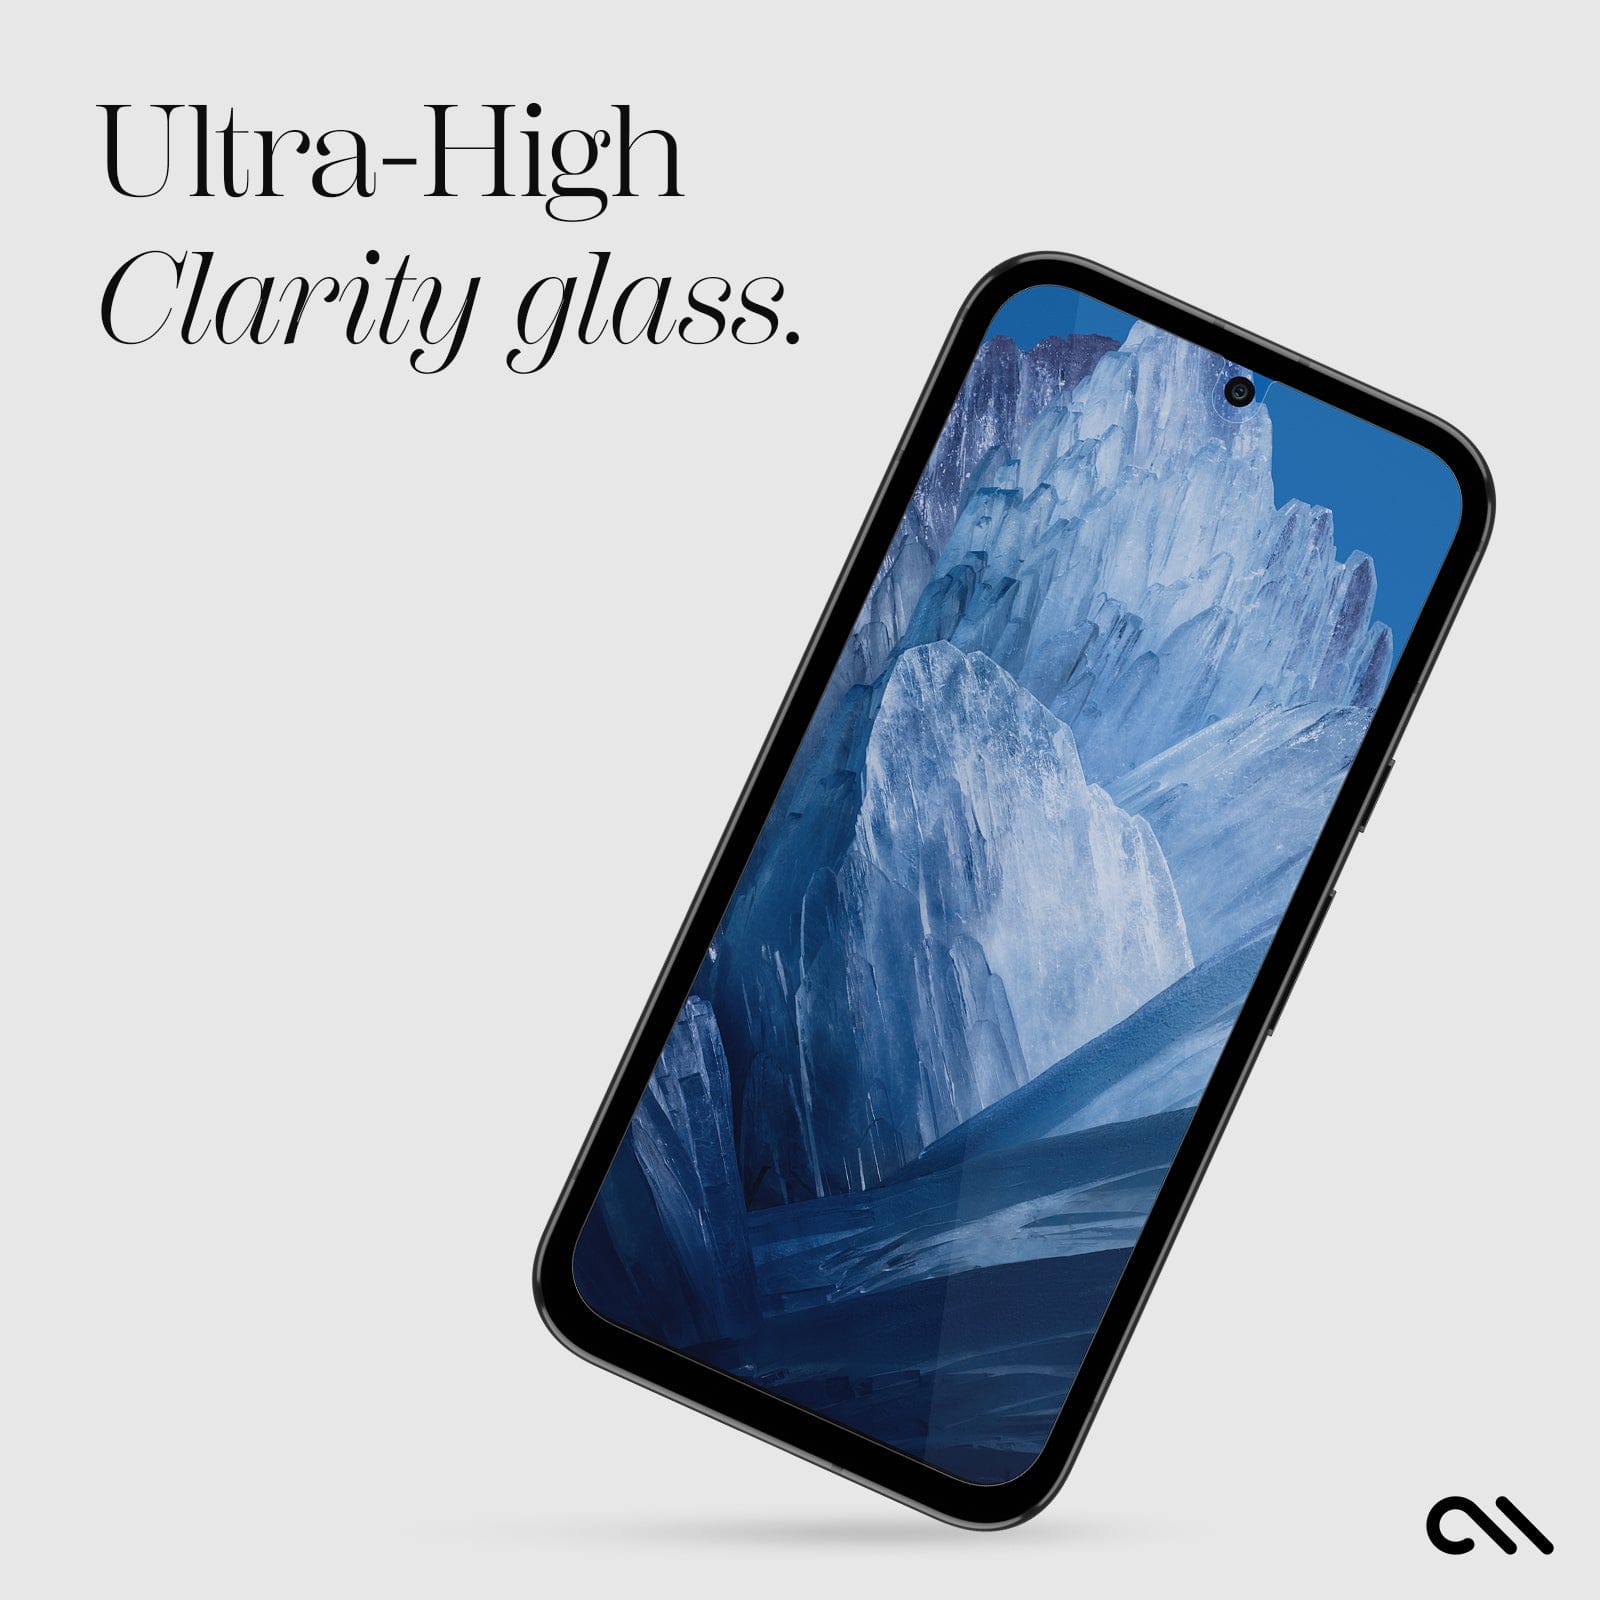 ultra-high clarity glass